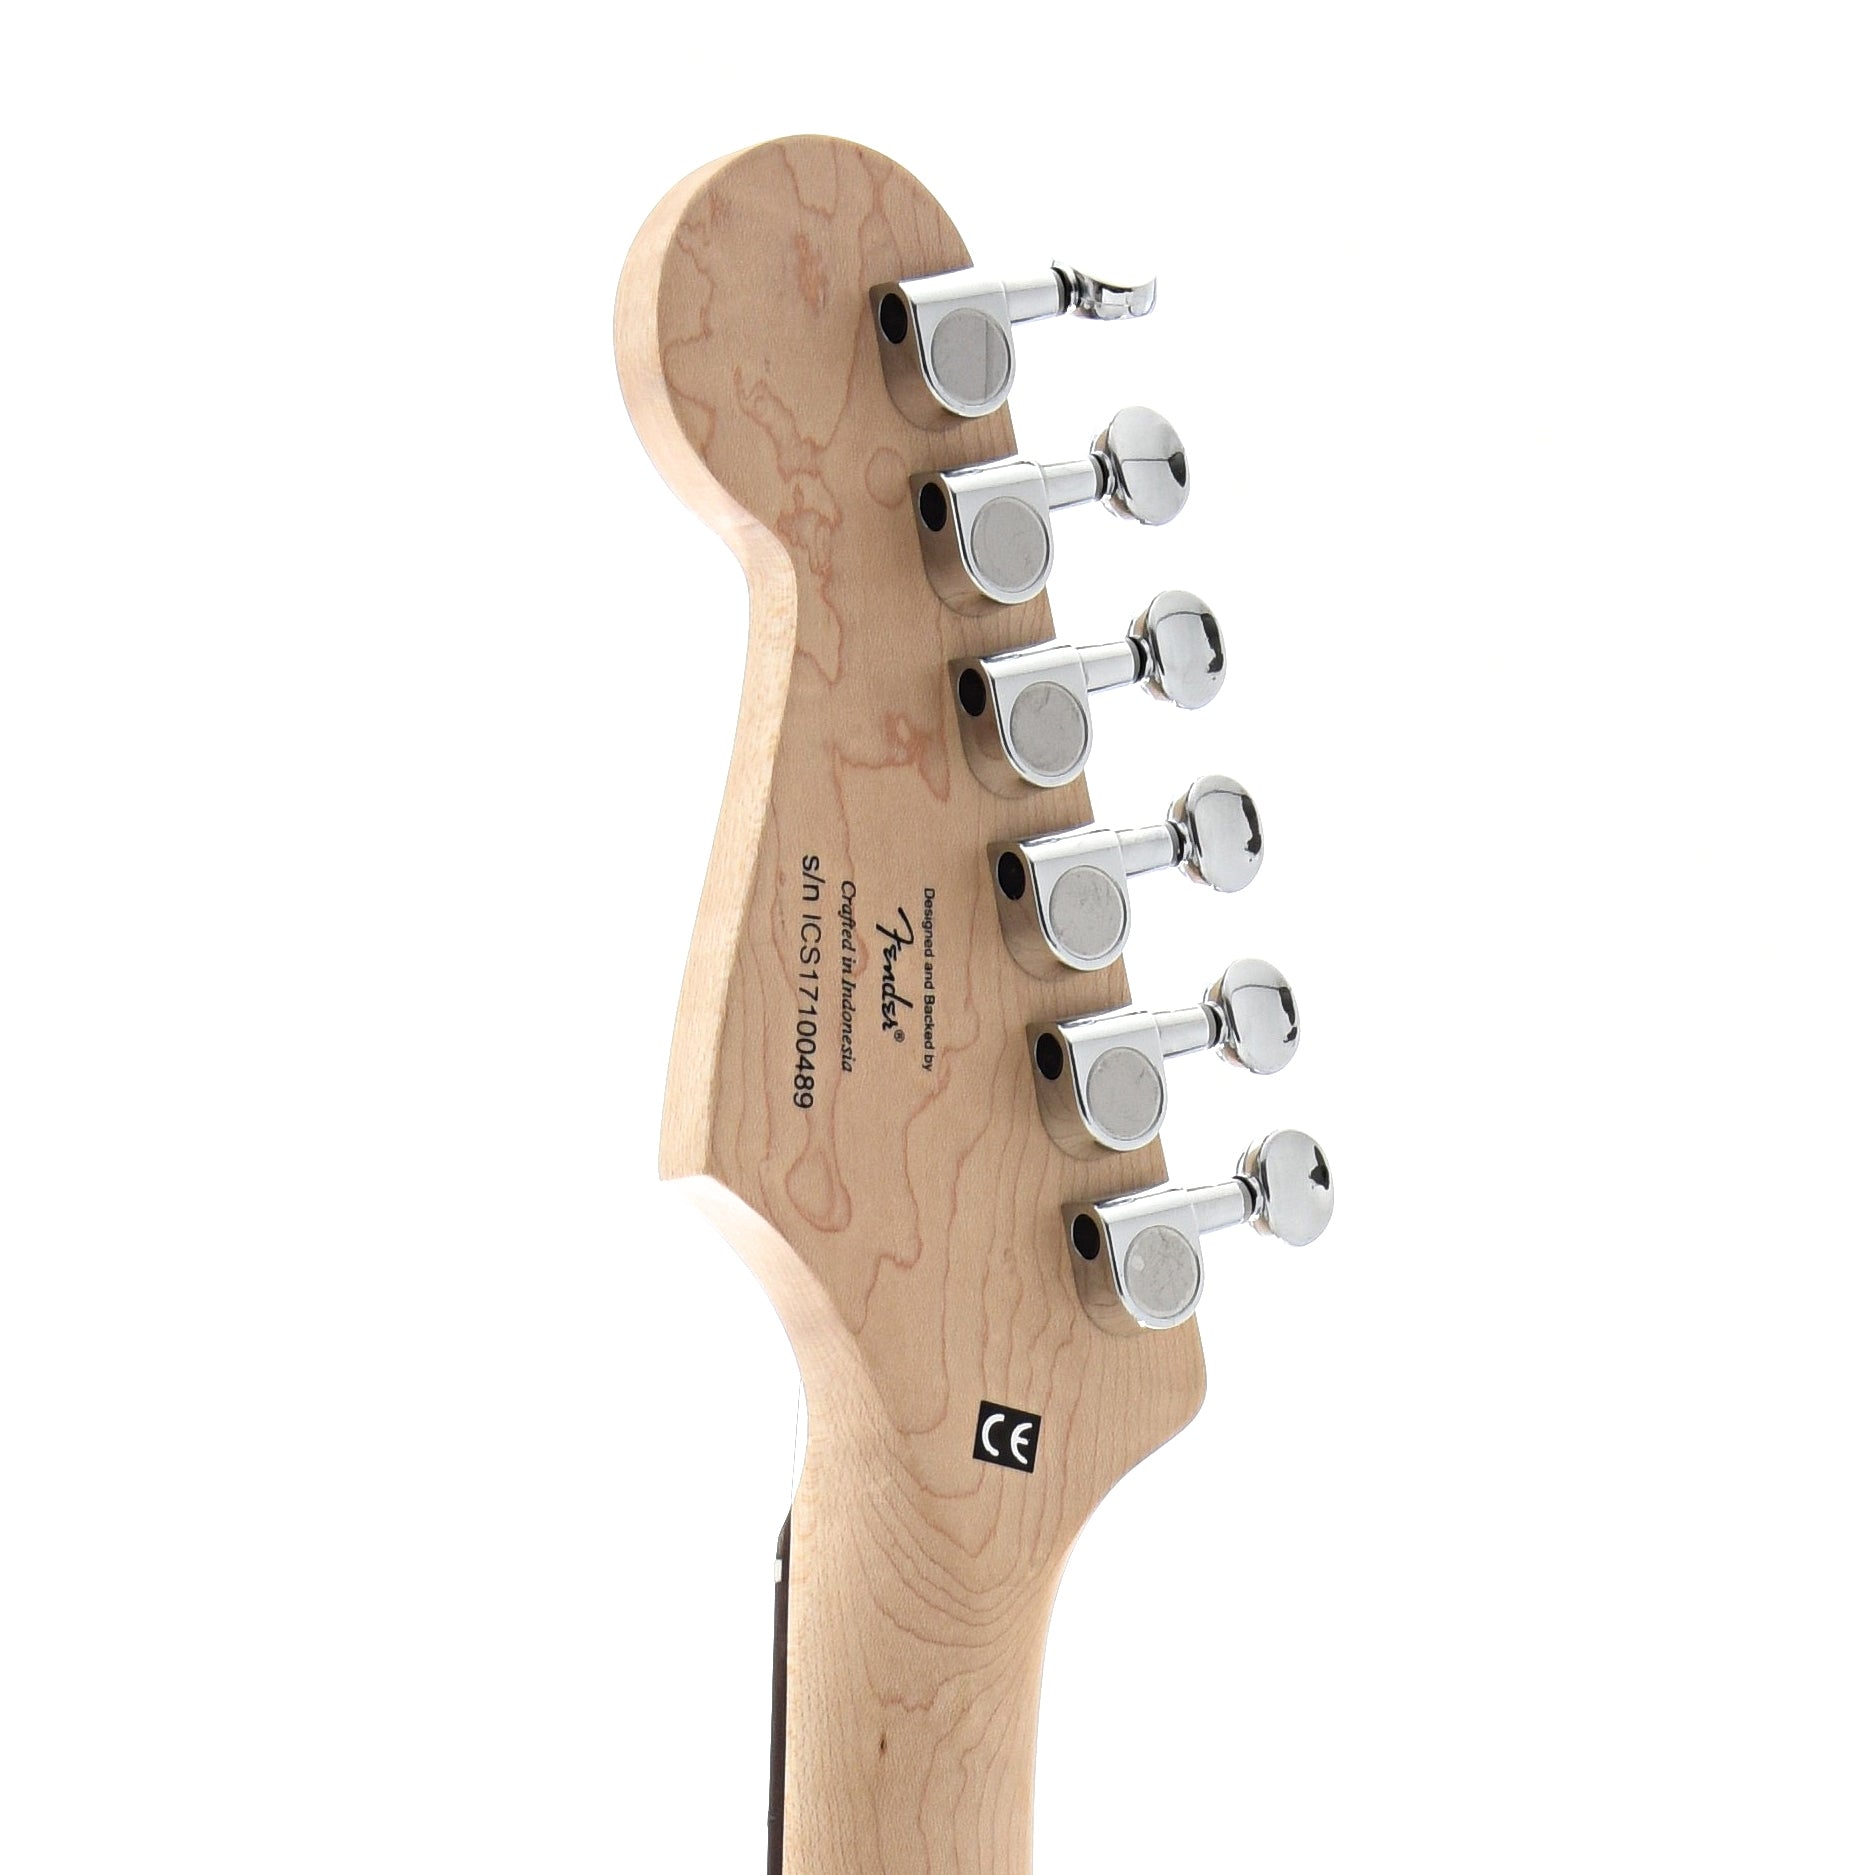 Back Headstock of Squier Mini Stratocaster